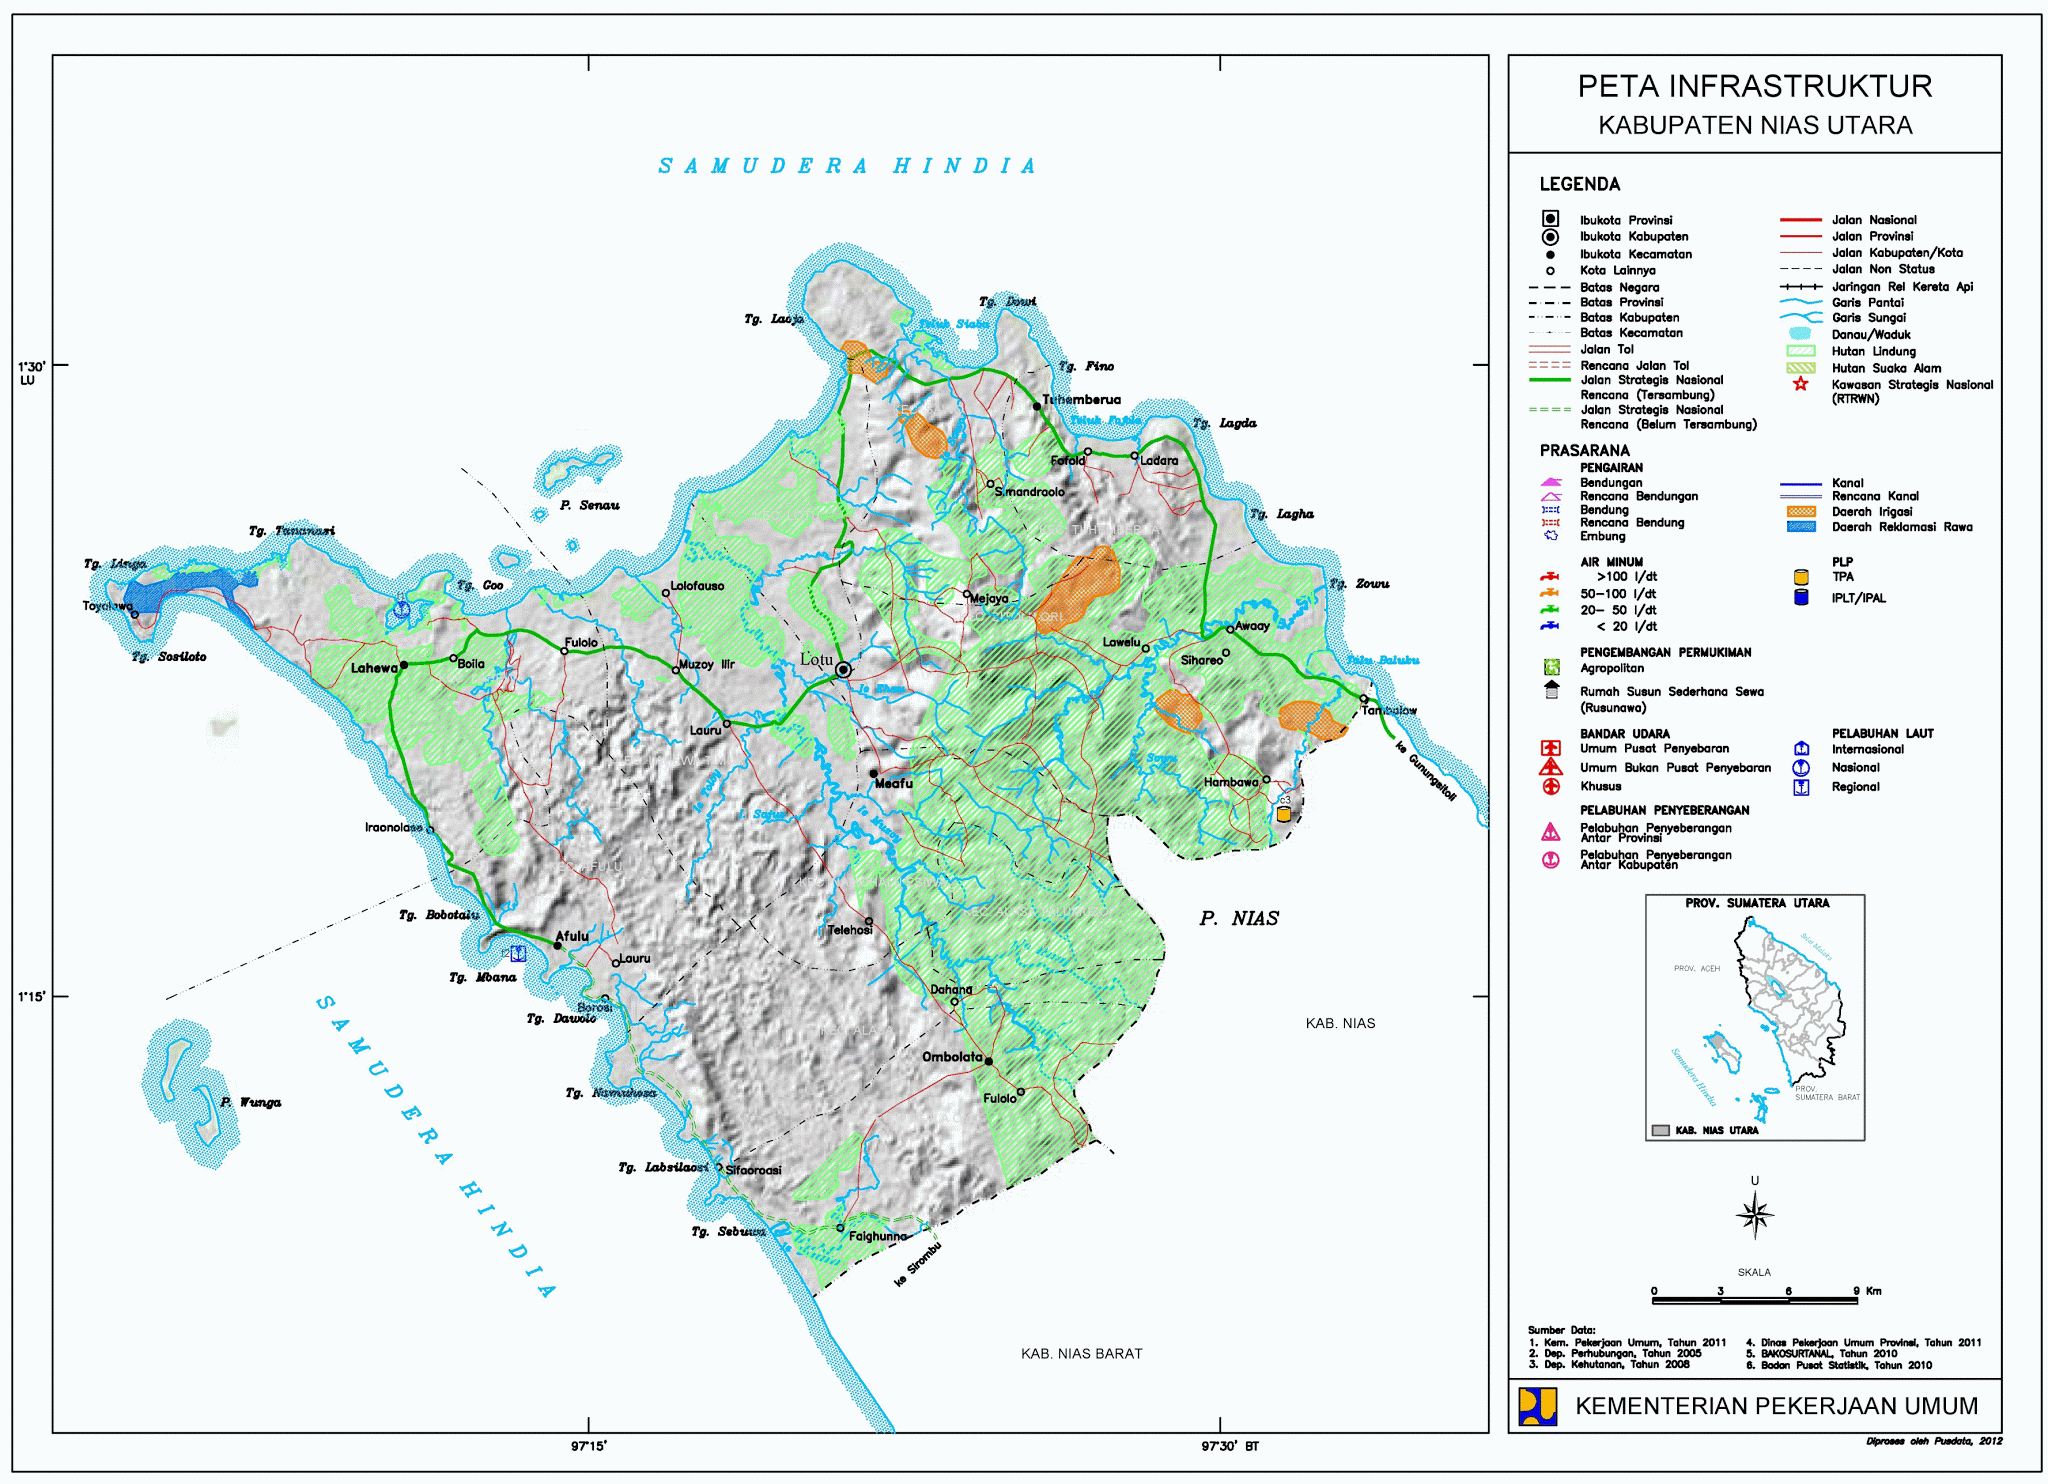 Peta Kota Peta Kabupaten  Nias Utara 